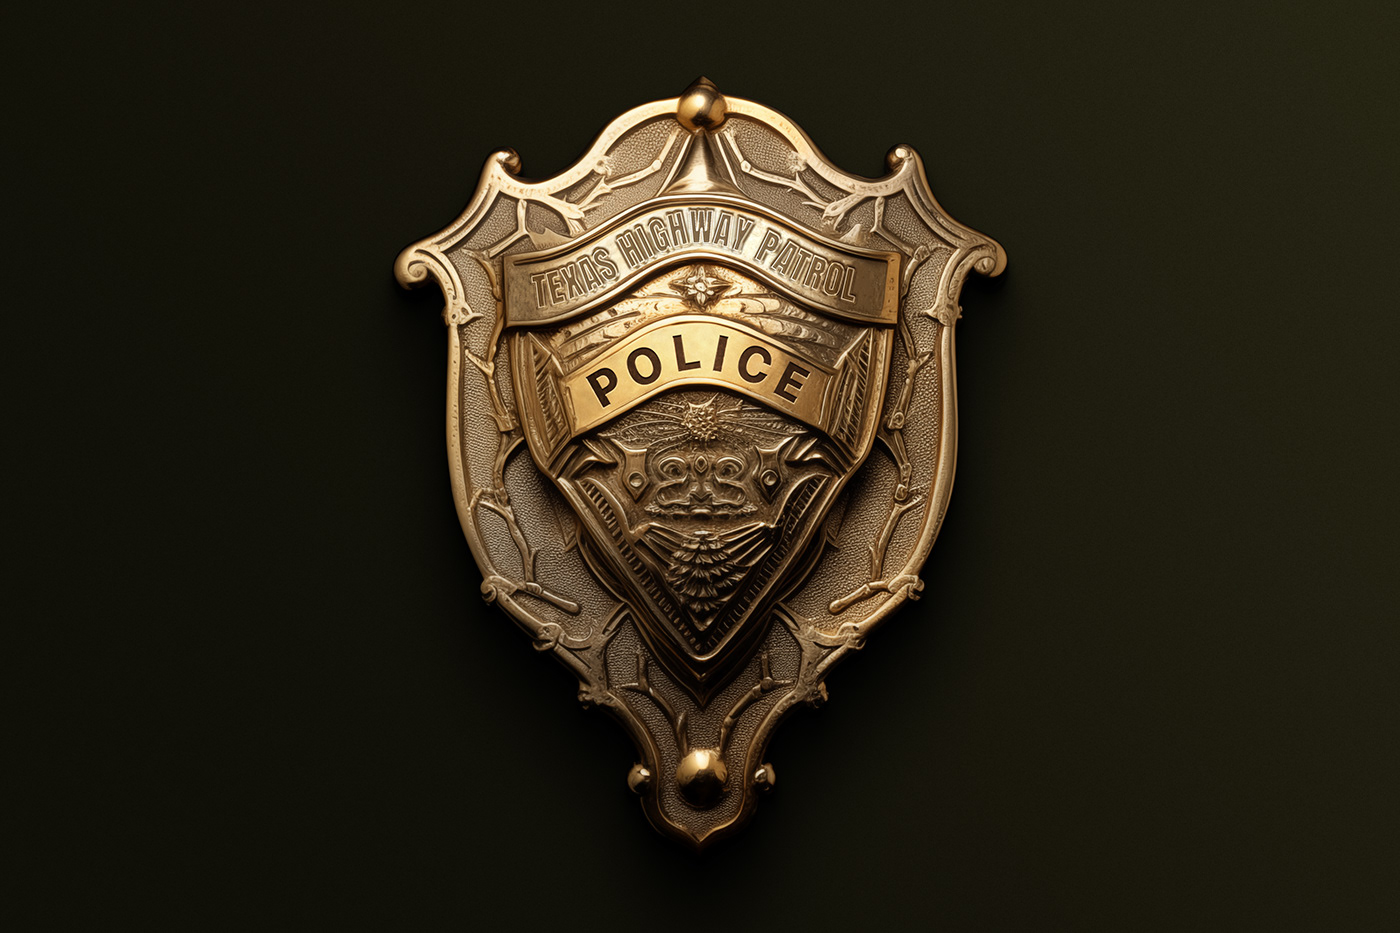 badge vintage Retro Badges Badge design police army sheriff western Mockup